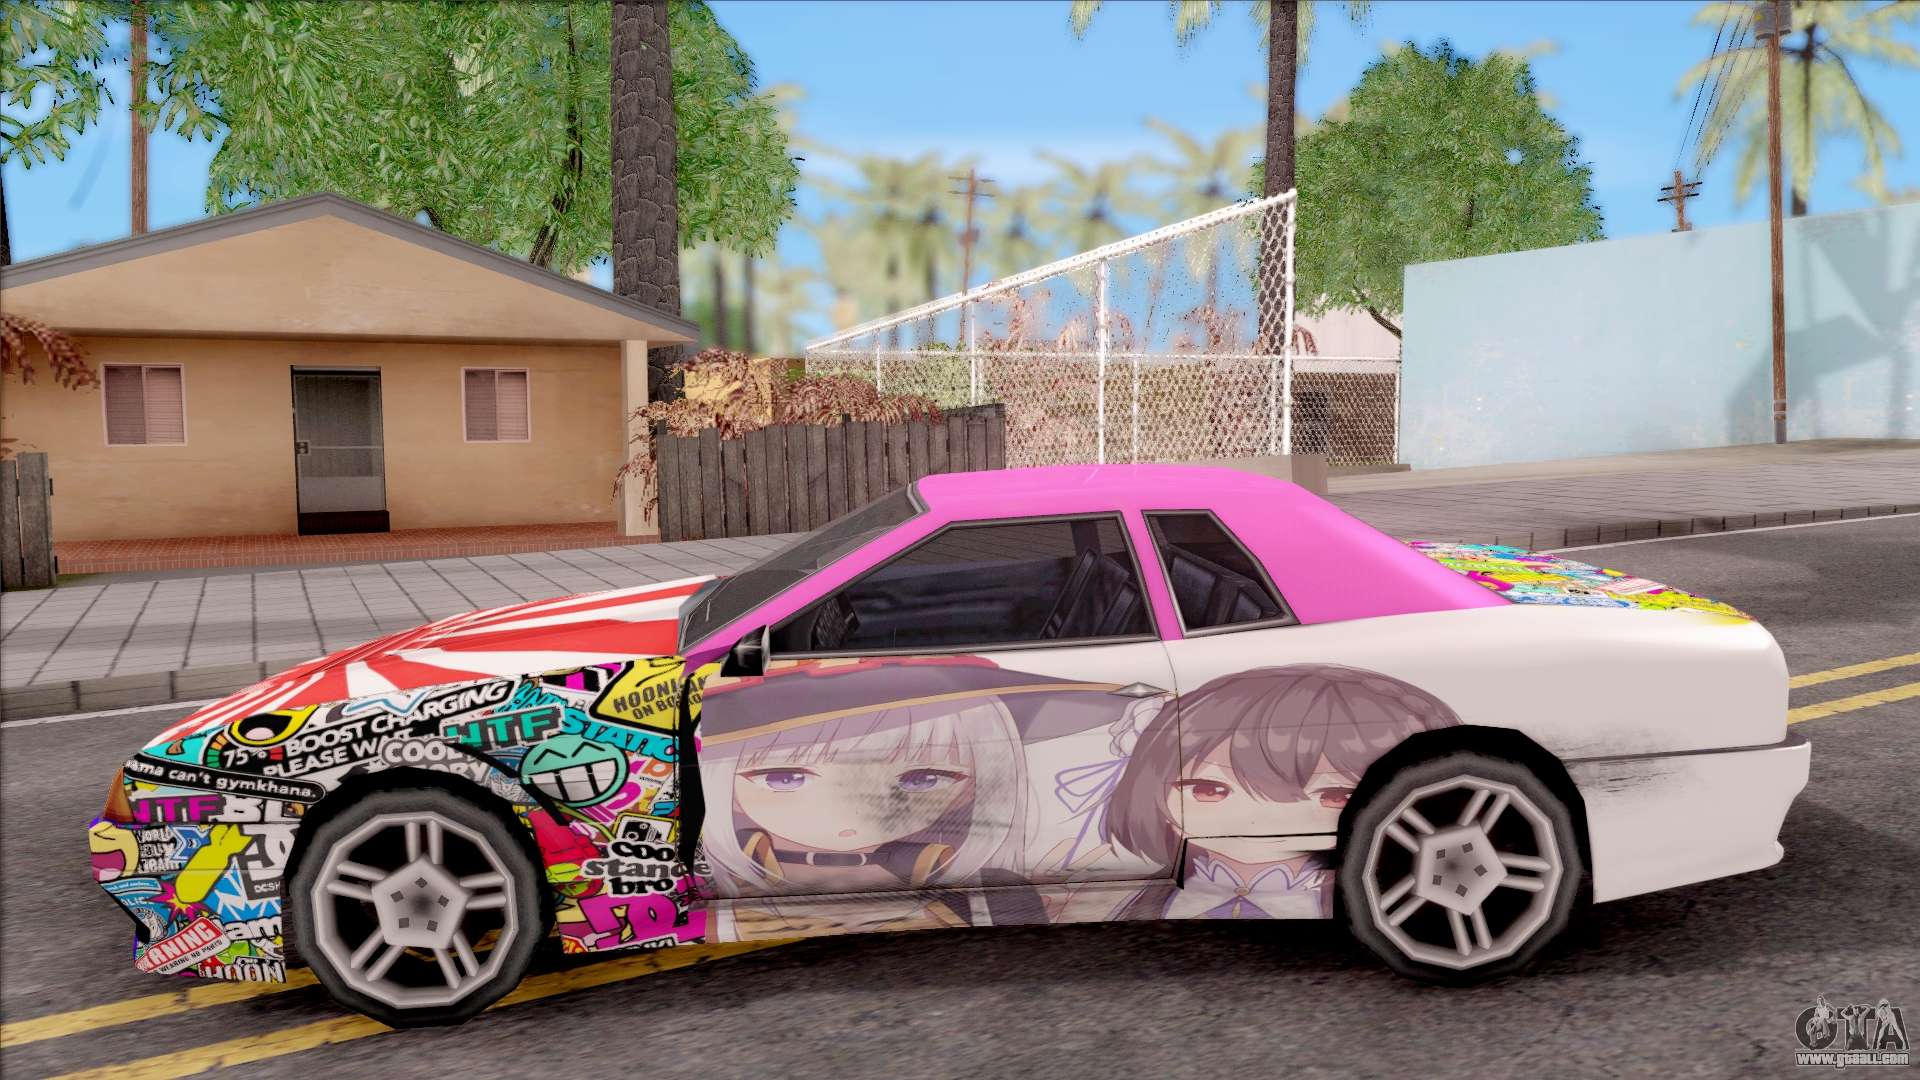 Anime car paint jobs cool or bad   YouTube